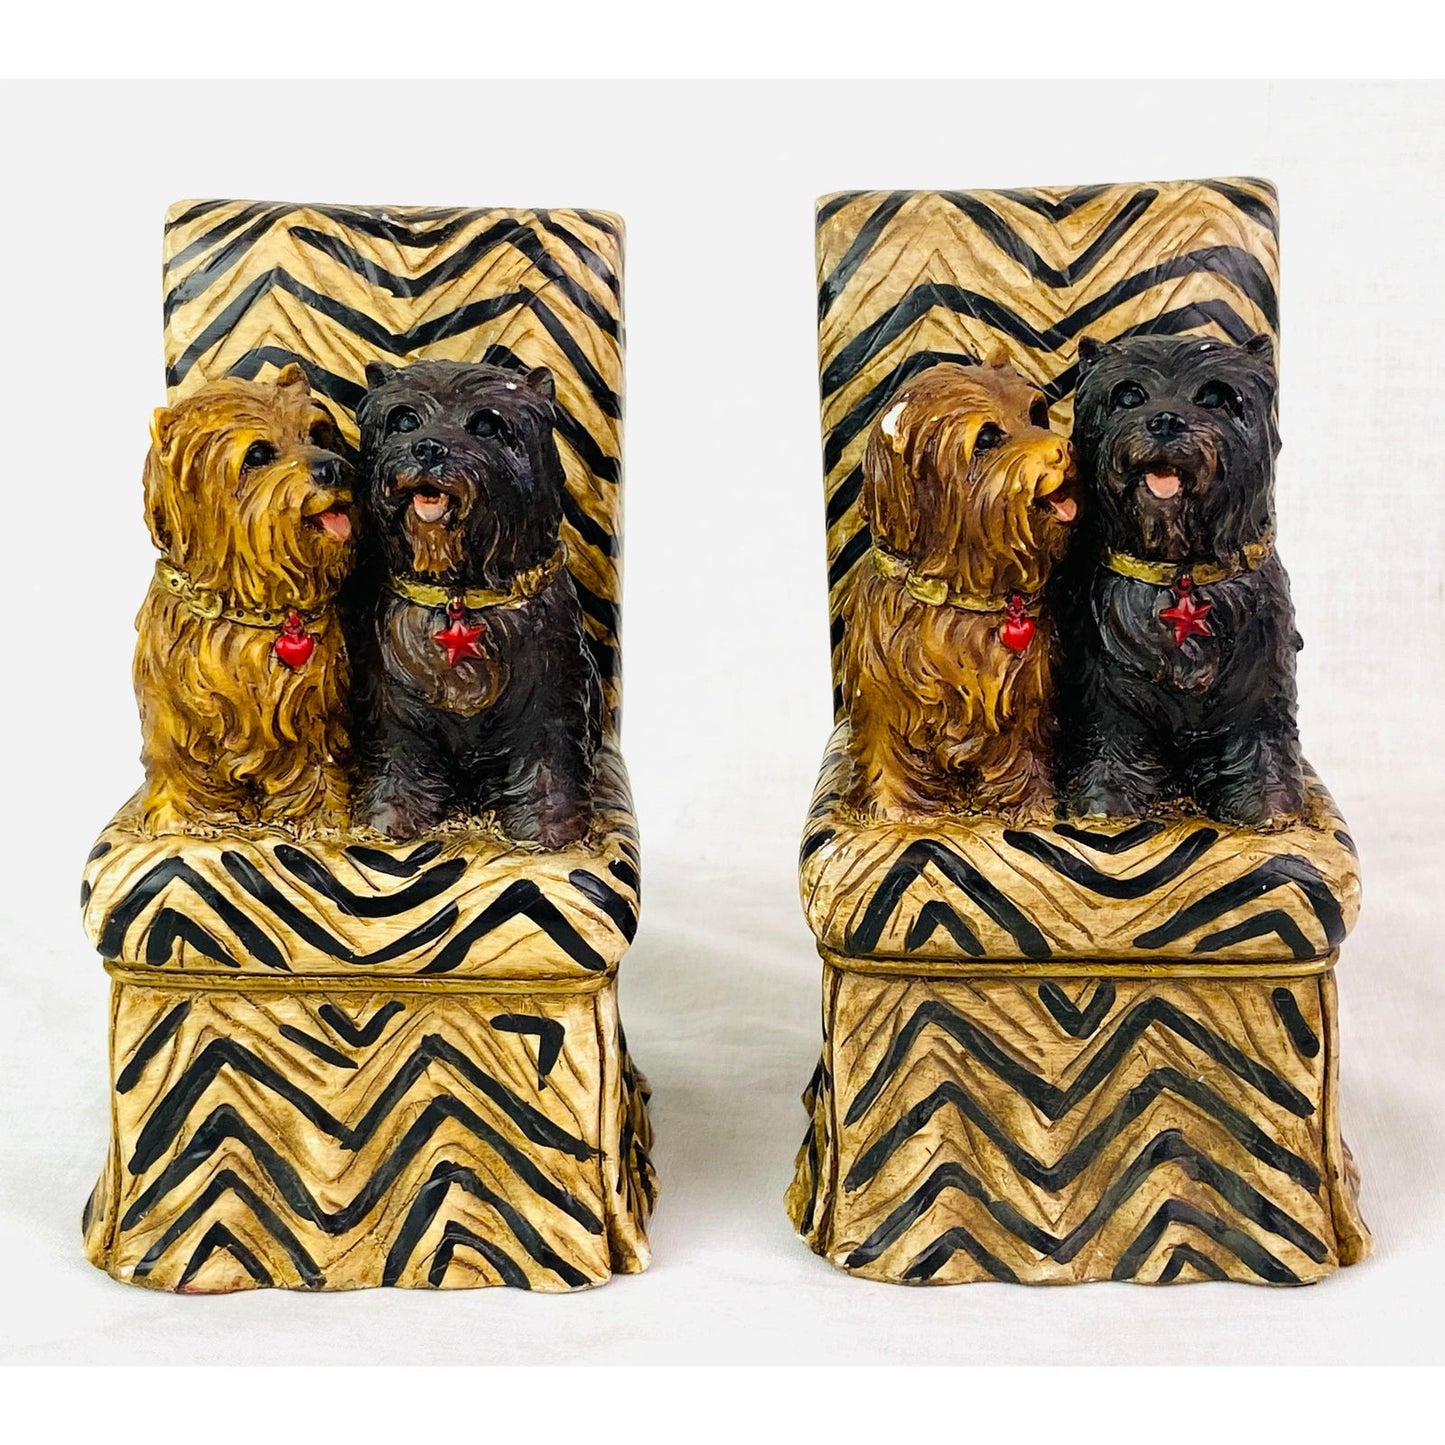 [SOLD] Hand Painted Porcelain Ceramic Dog Bookends – Set of 2